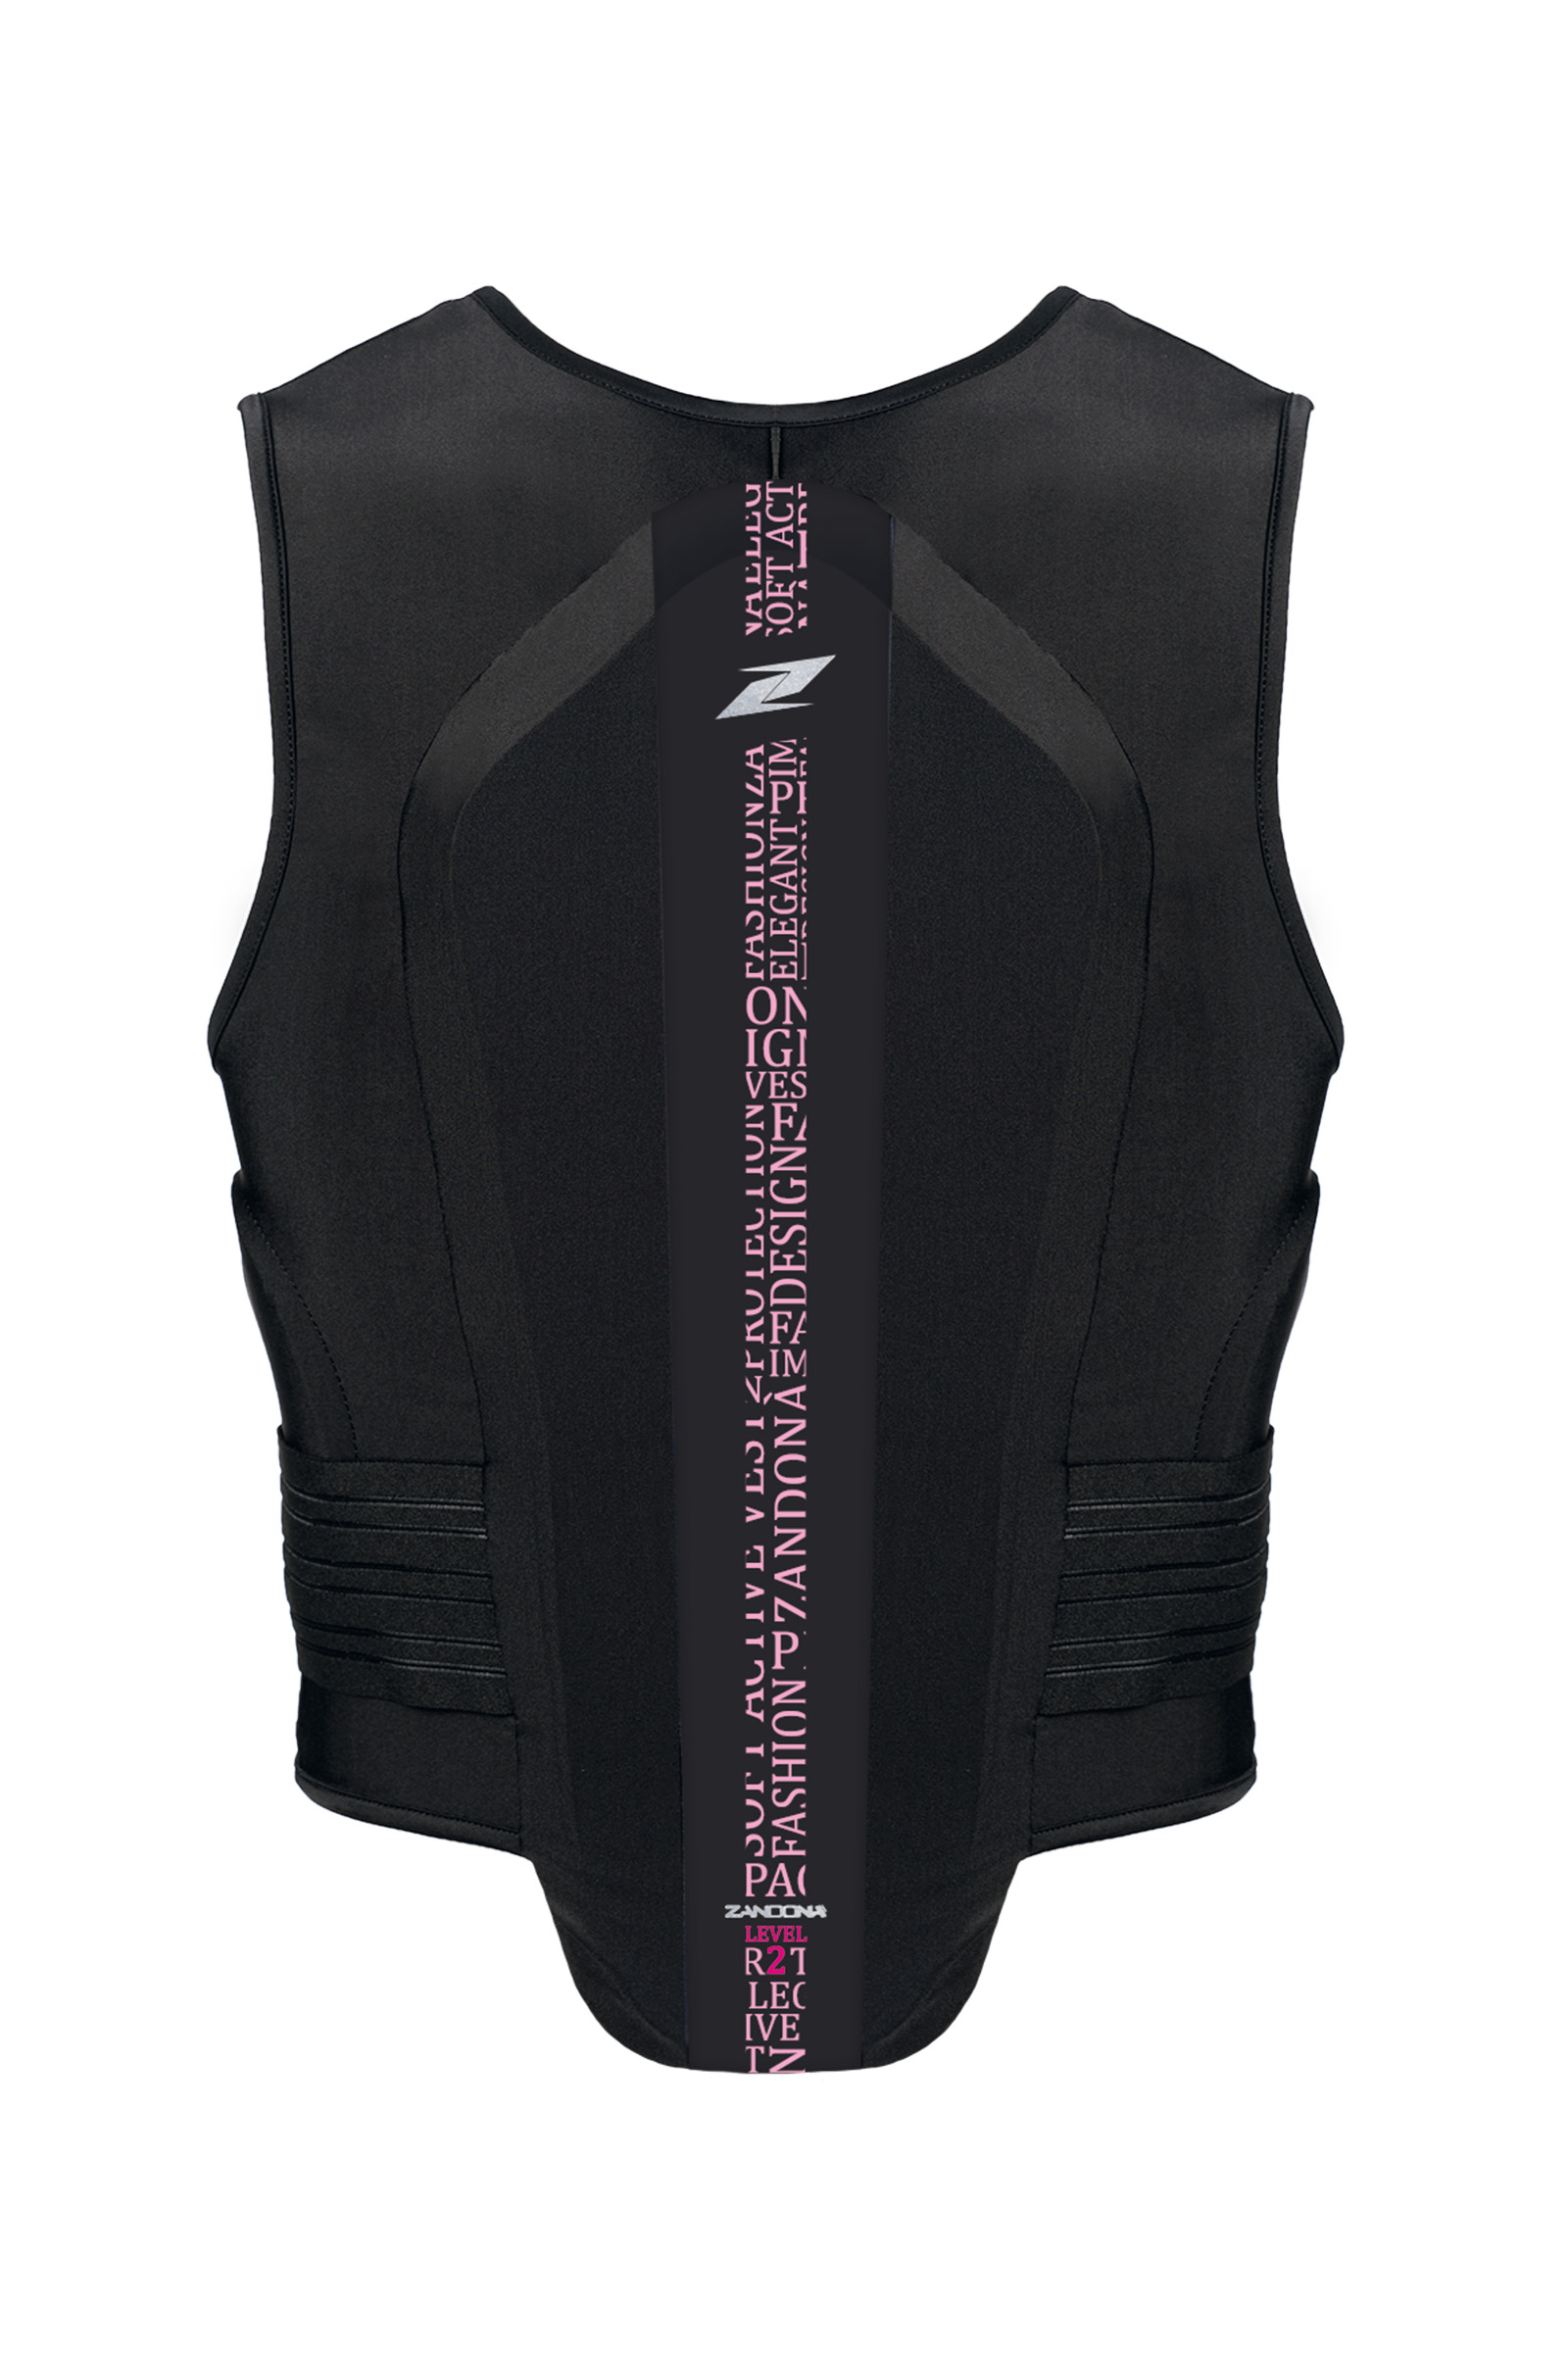 Buy Zandona Soft Vest Back Protector Pro x6 (158-167cm)